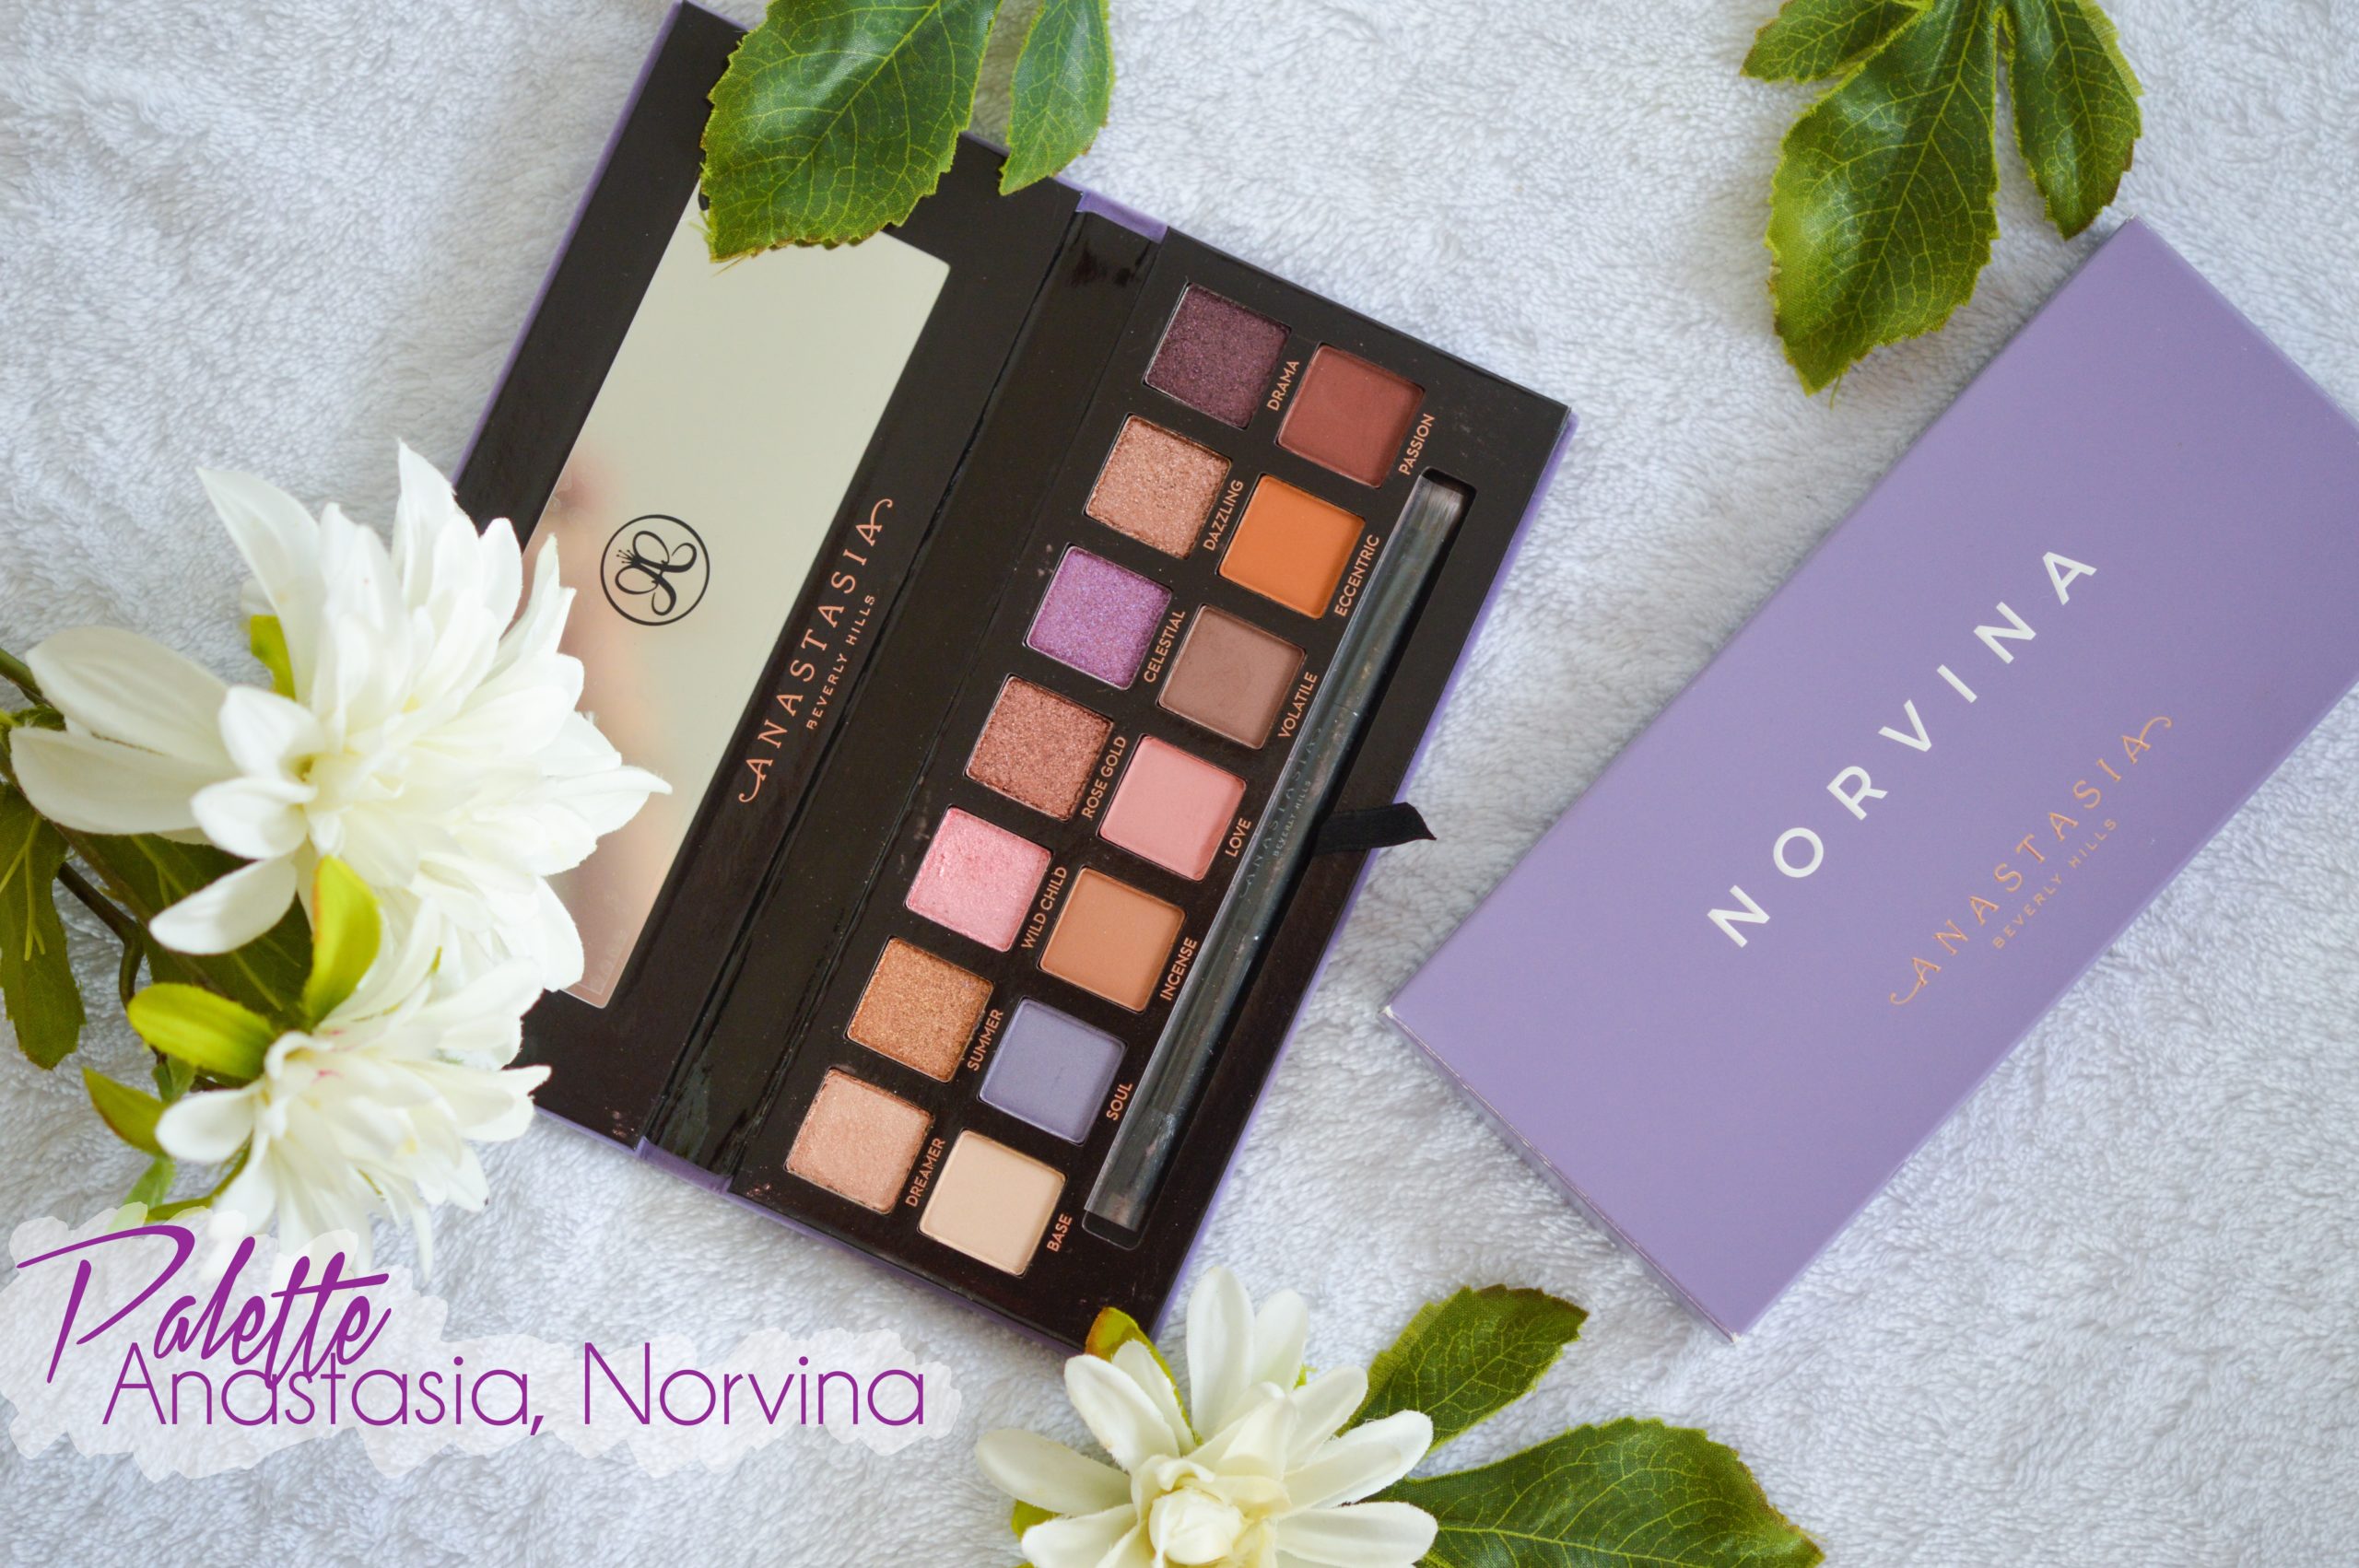 Norvina d'Anastasia Beverly Hills, la palette aux tons rose/violet